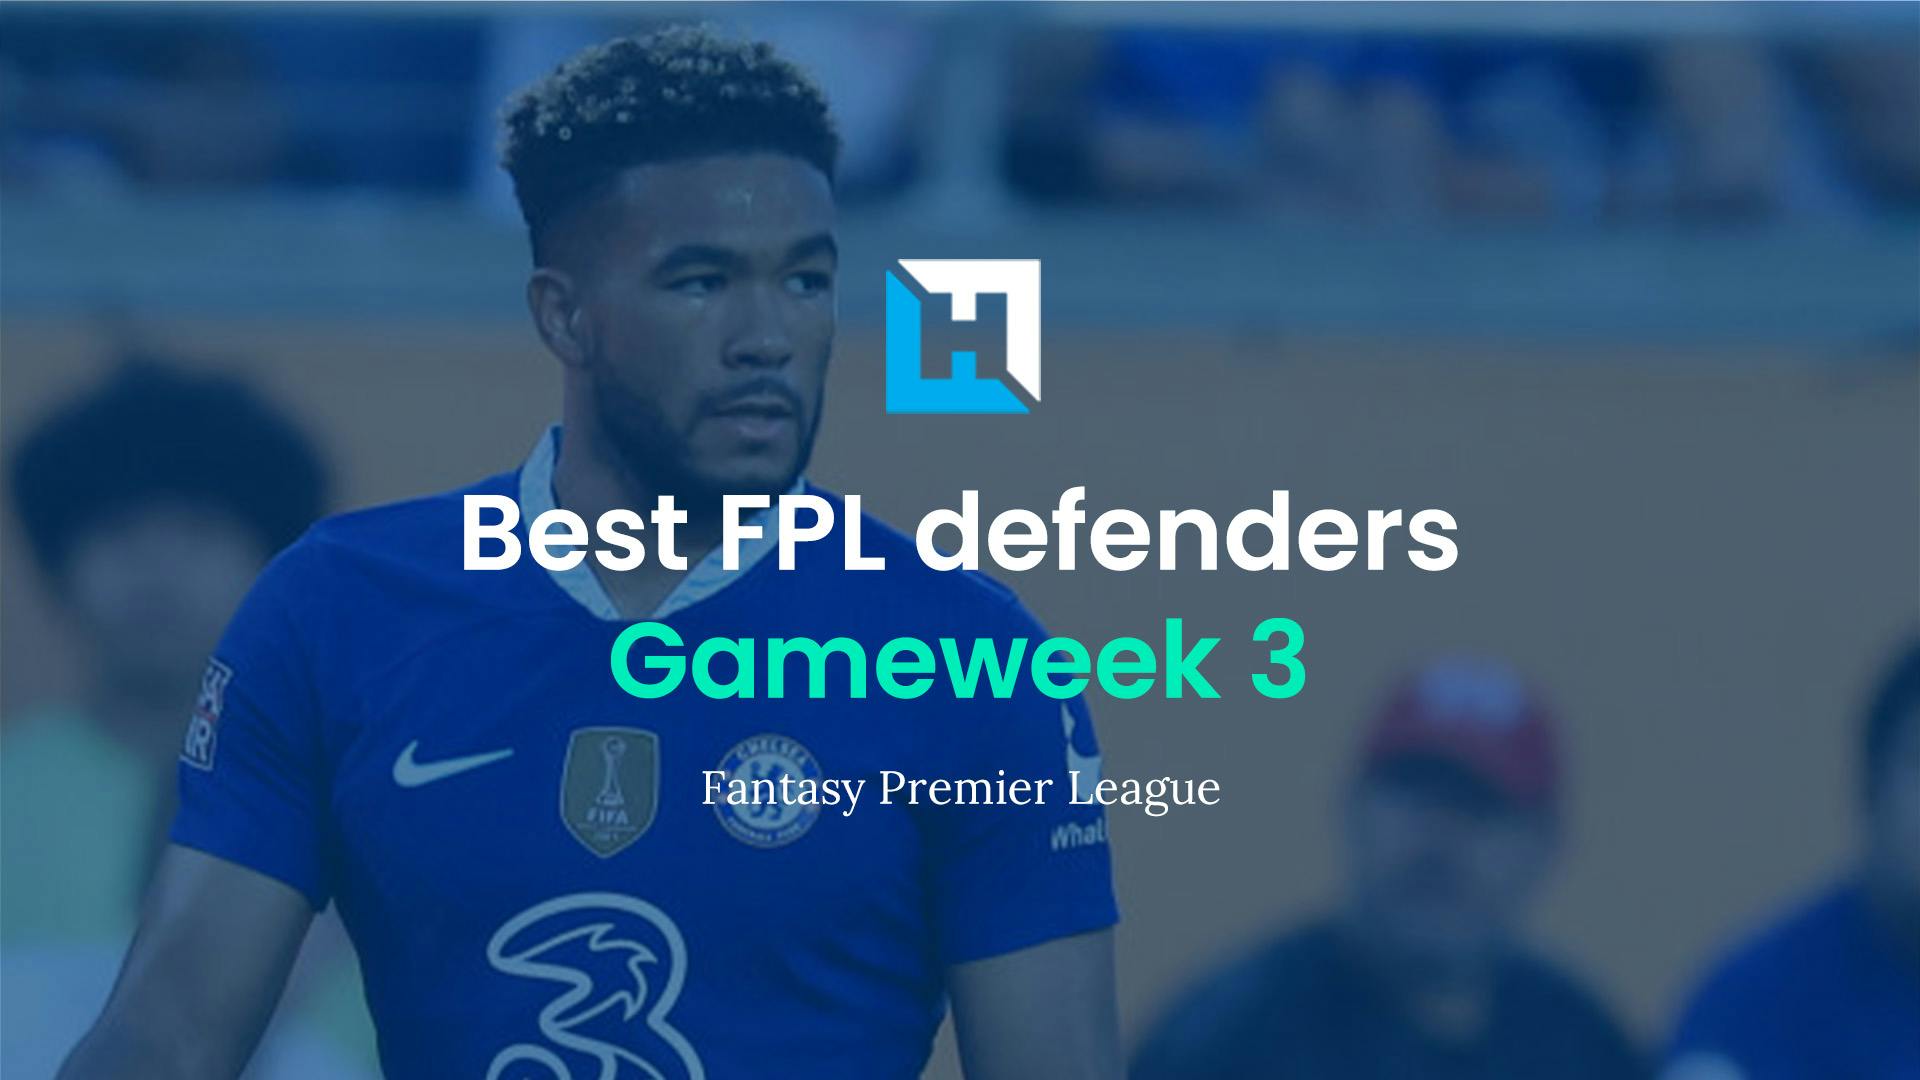 Best FPL players for Gameweek 3: Top 5 best defenders